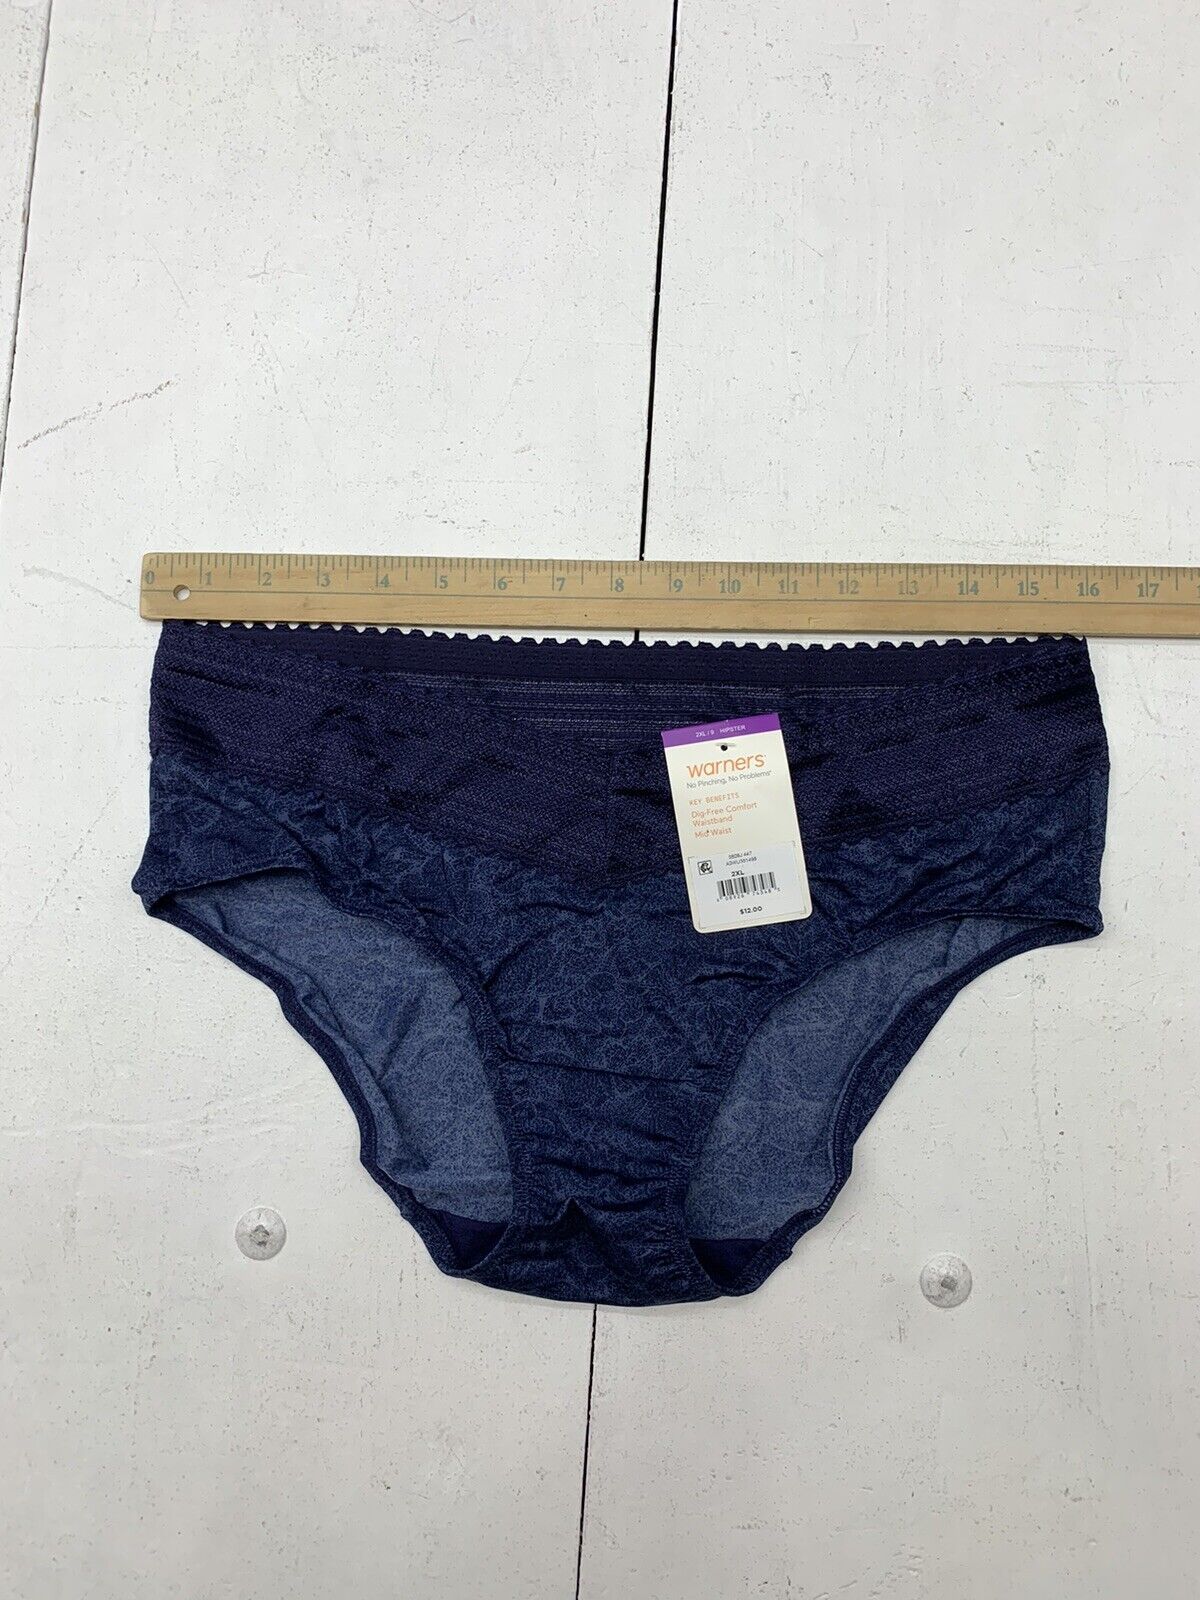 Warners Womens Dark Blue Hipster Panties Size 2XL - beyond exchange